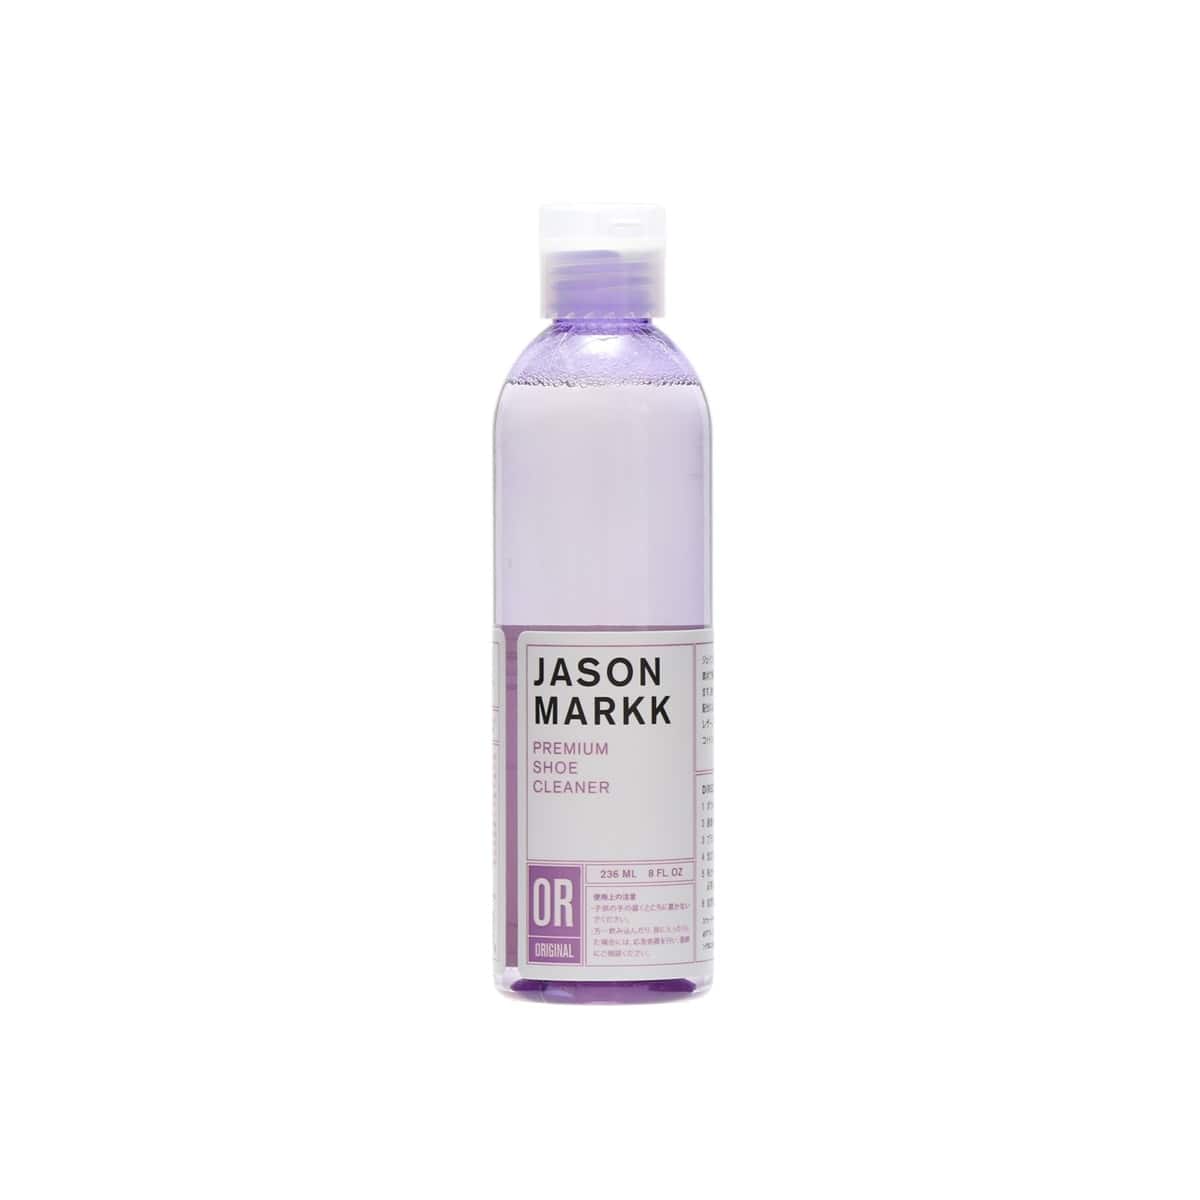 JASON MARKK 8 OZ. PREMIUM SHOE CLEANER CLEAR